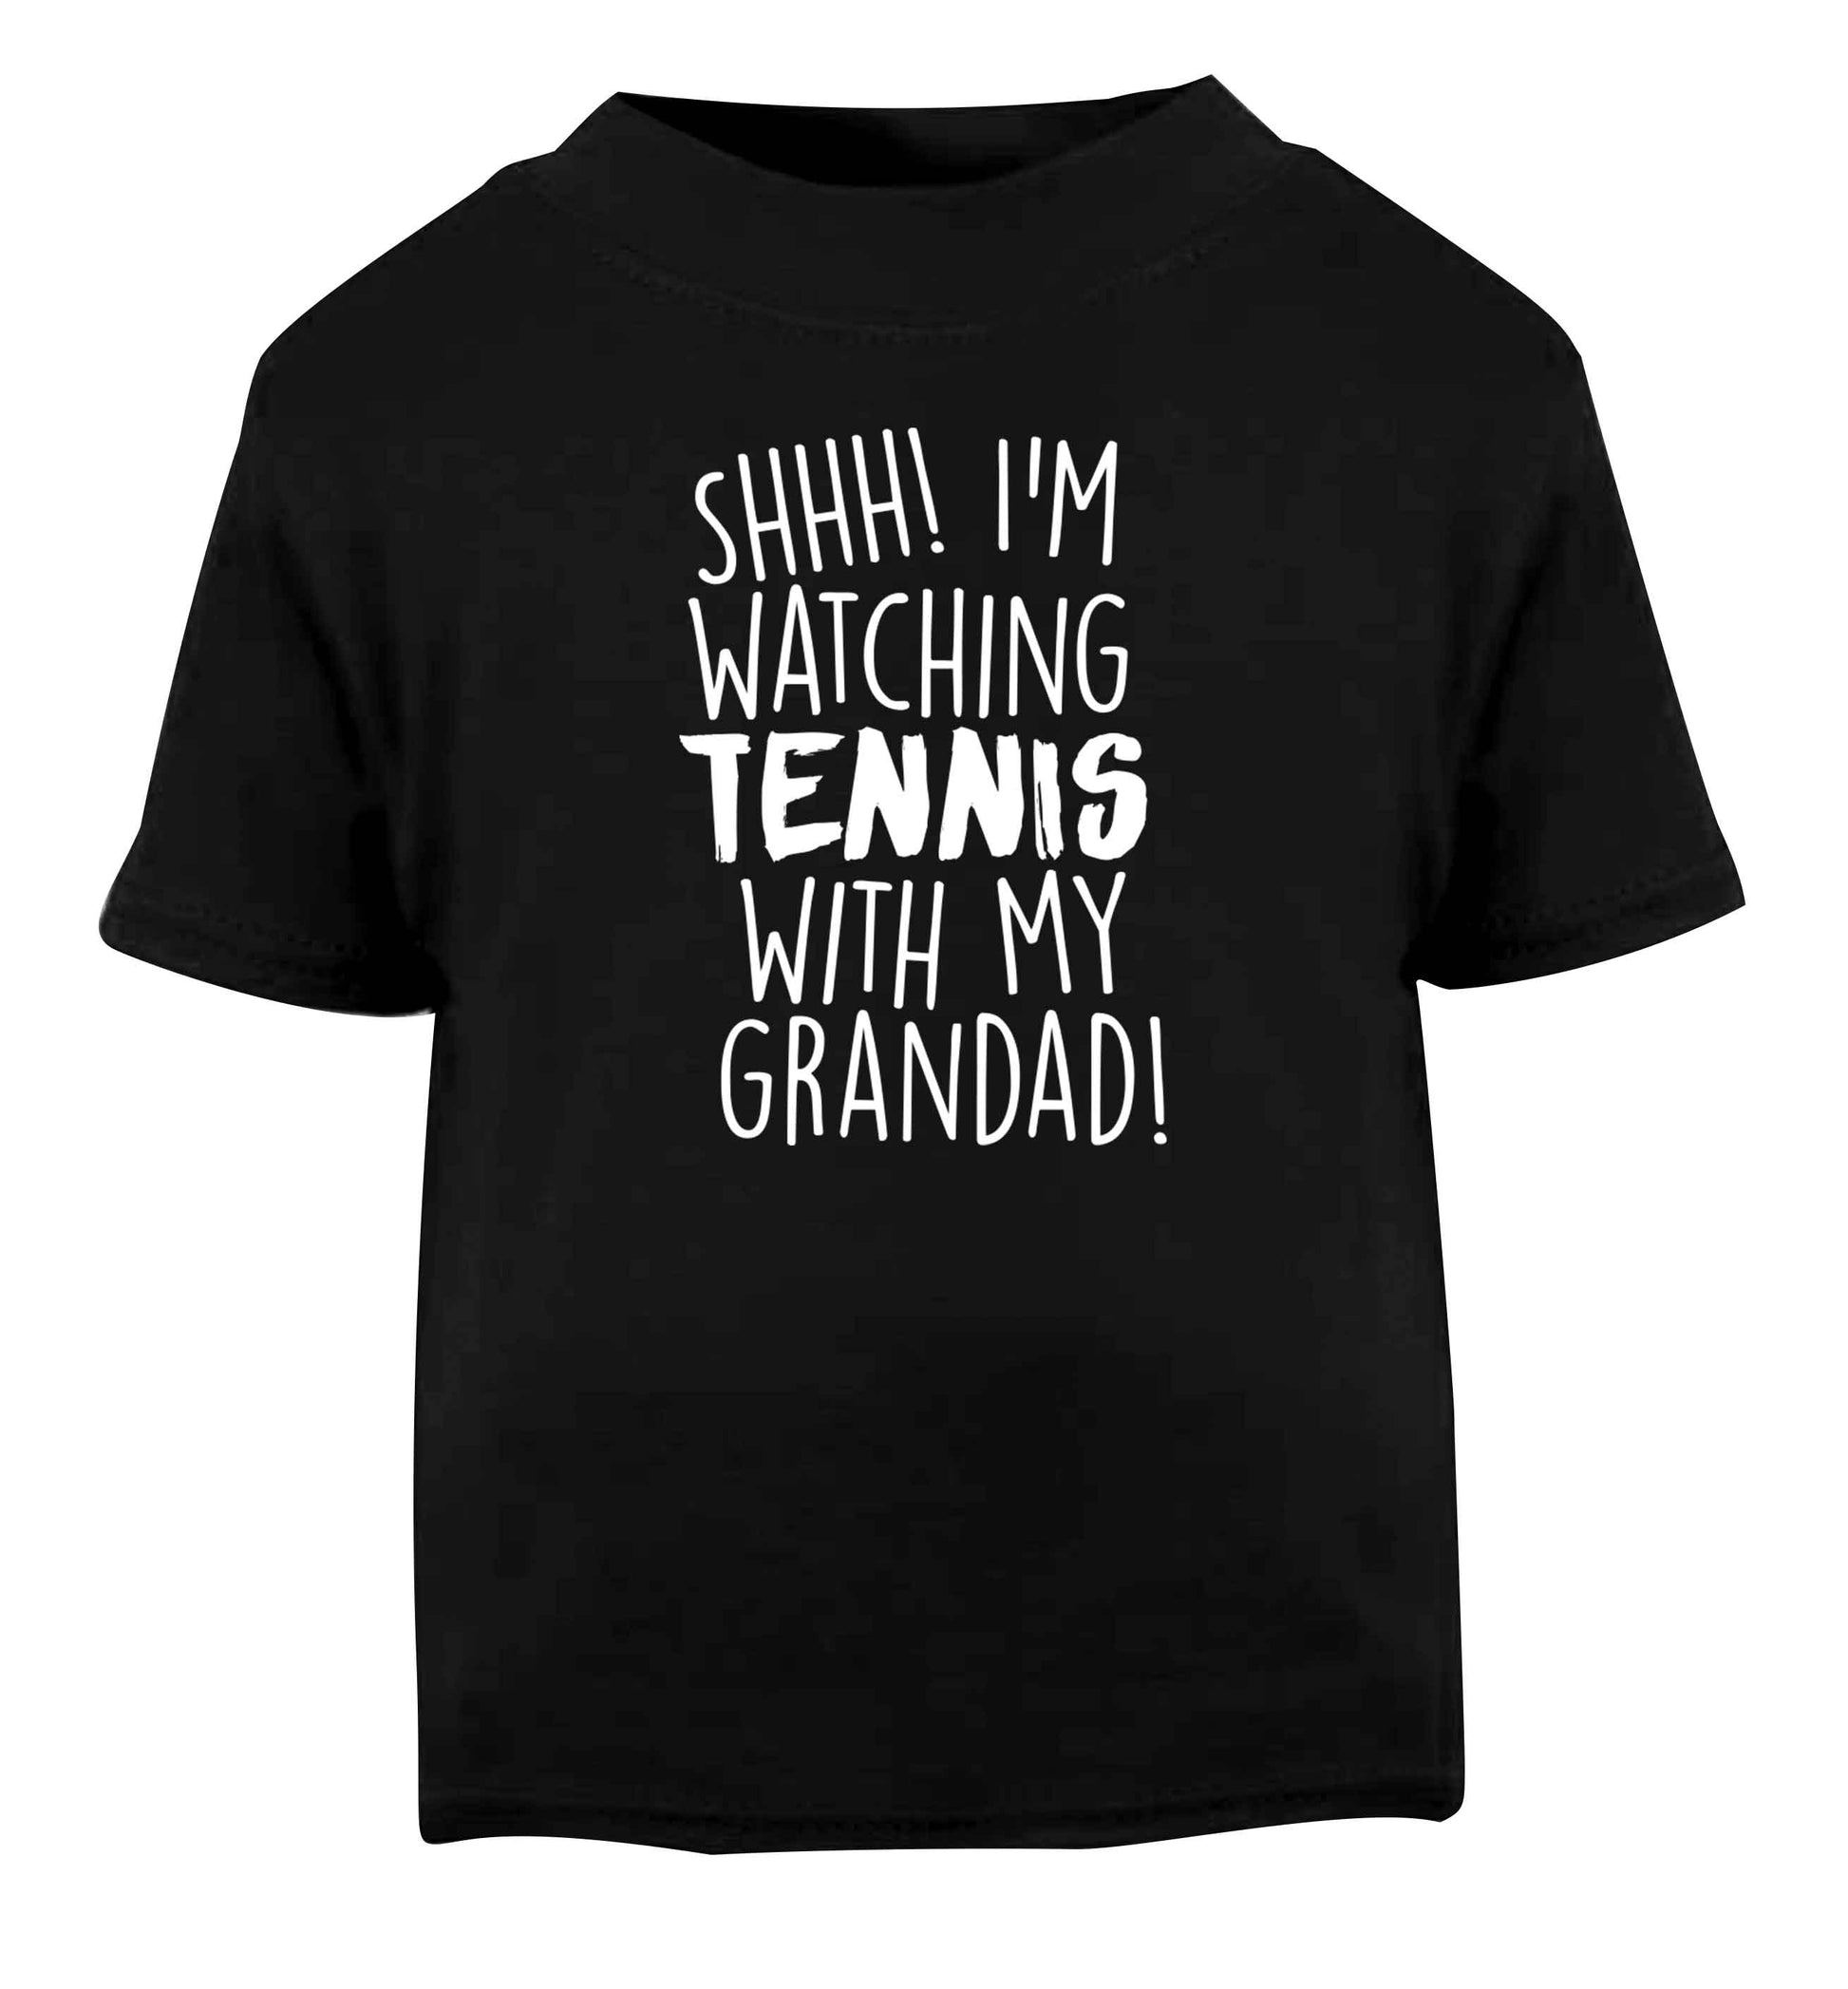 Shh! I'm watching tennis with my grandad! Black Baby Toddler Tshirt 2 years